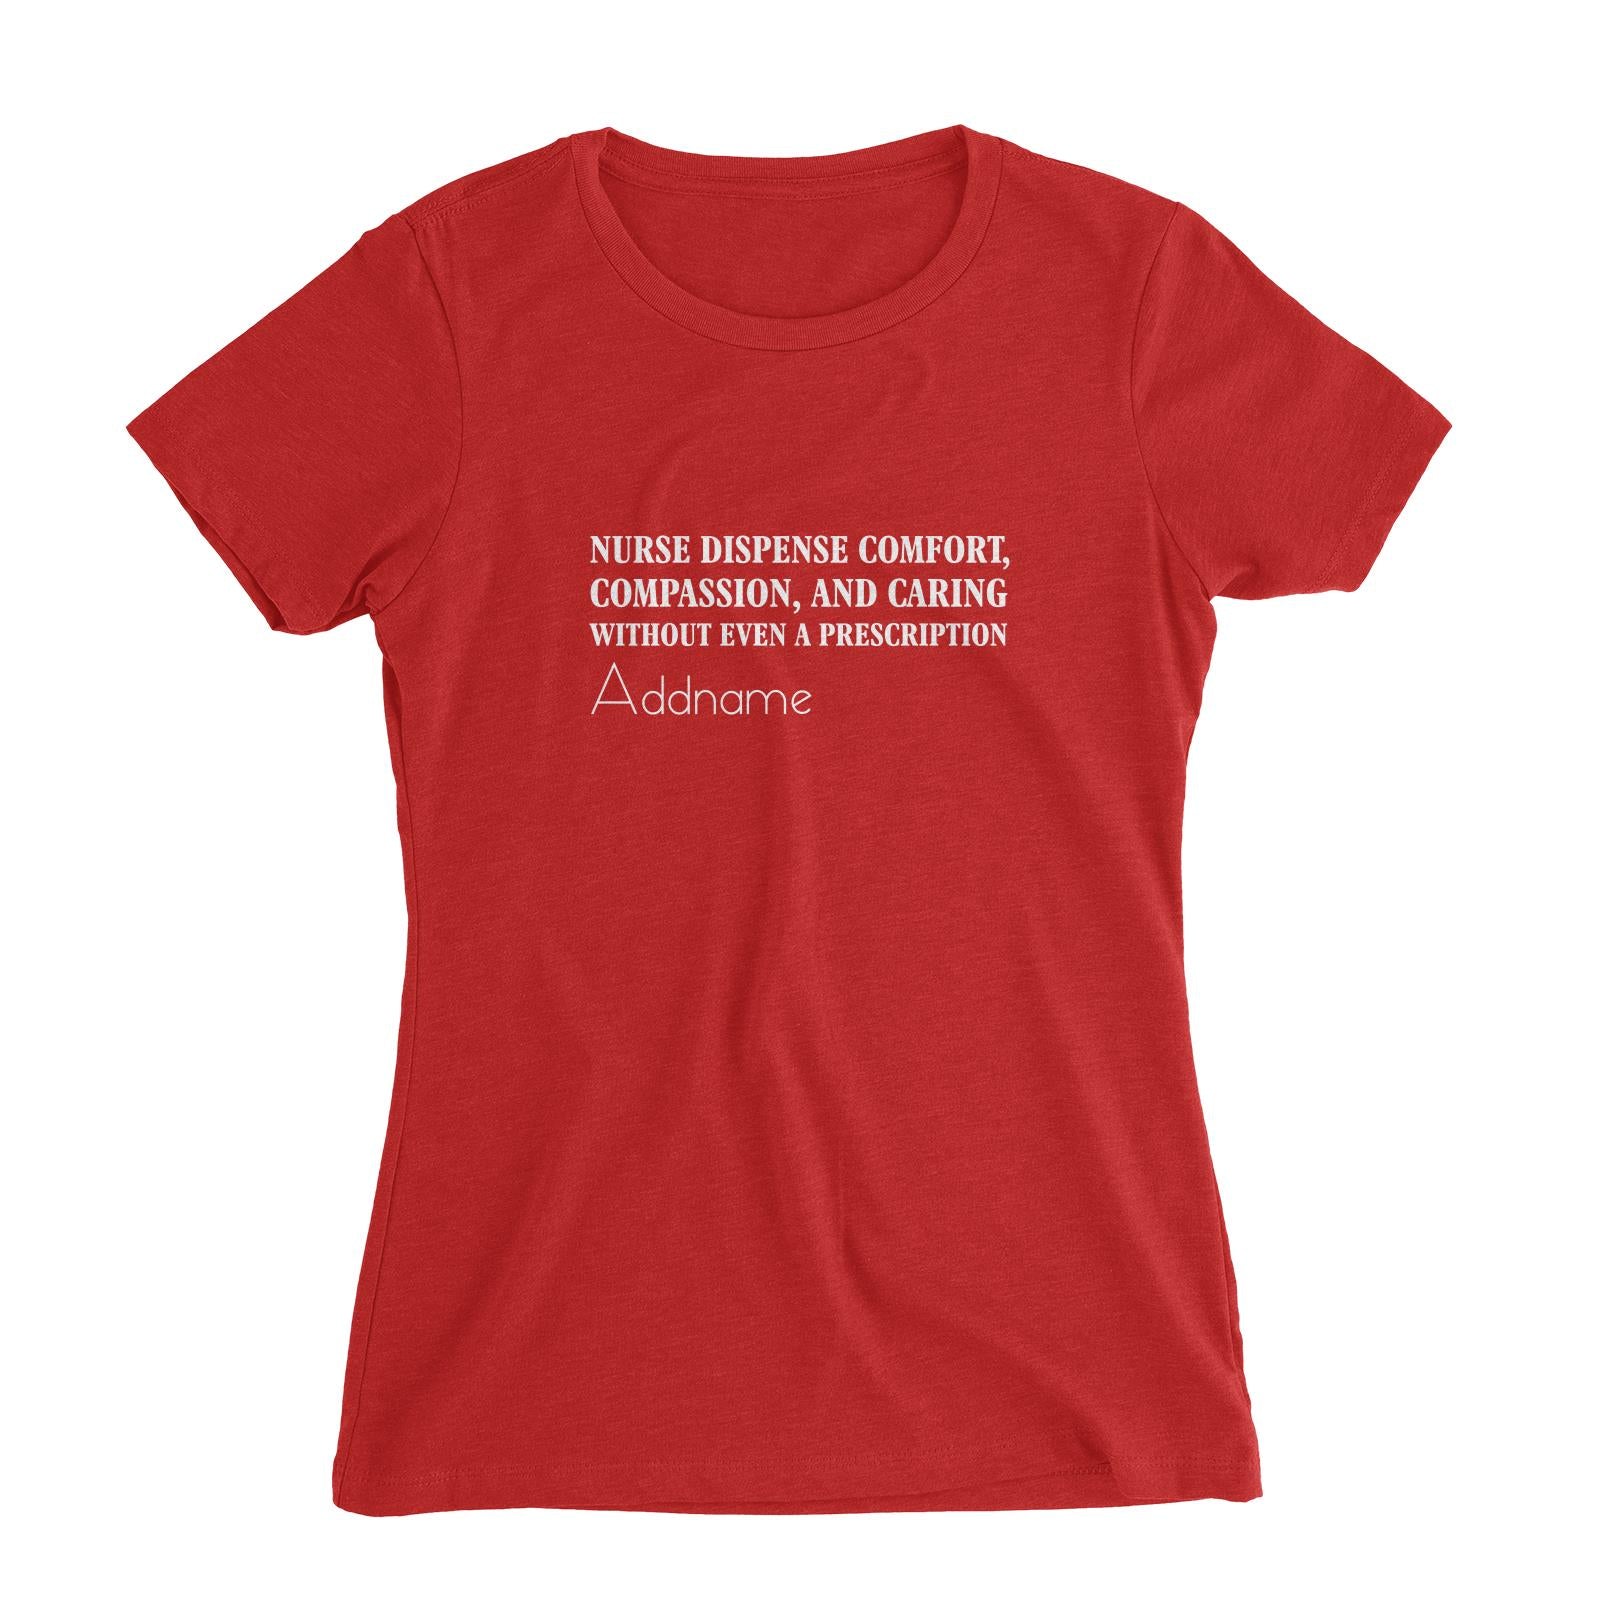 Nurse Dispense Comfort, Compassion, And Caring Without Even A Prescription Women's Slim Fit T-Shirt